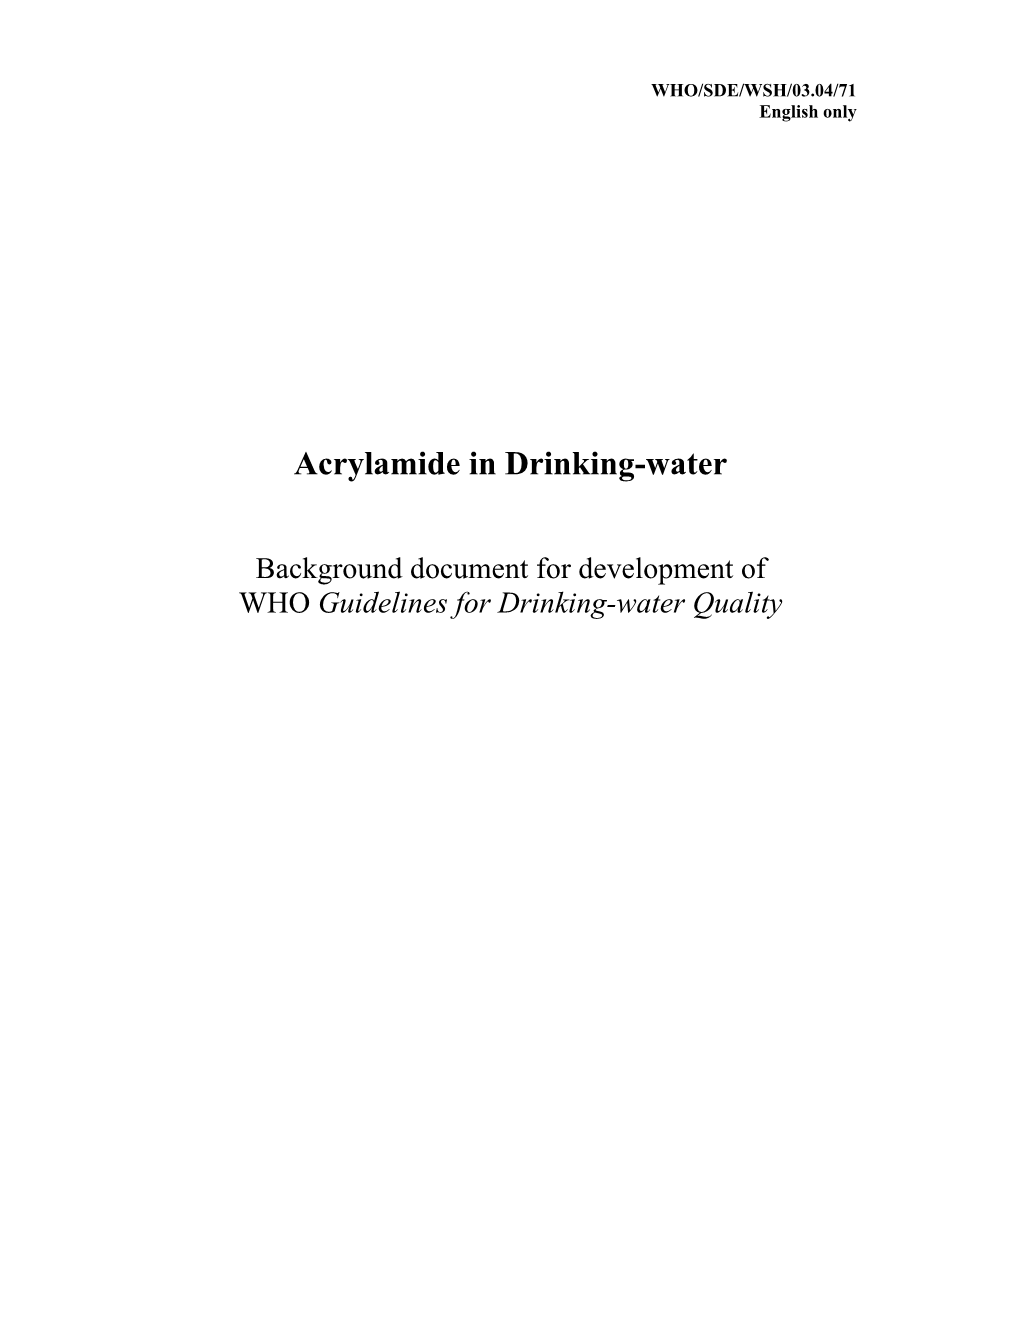 Acrylamide in Drinking-Water